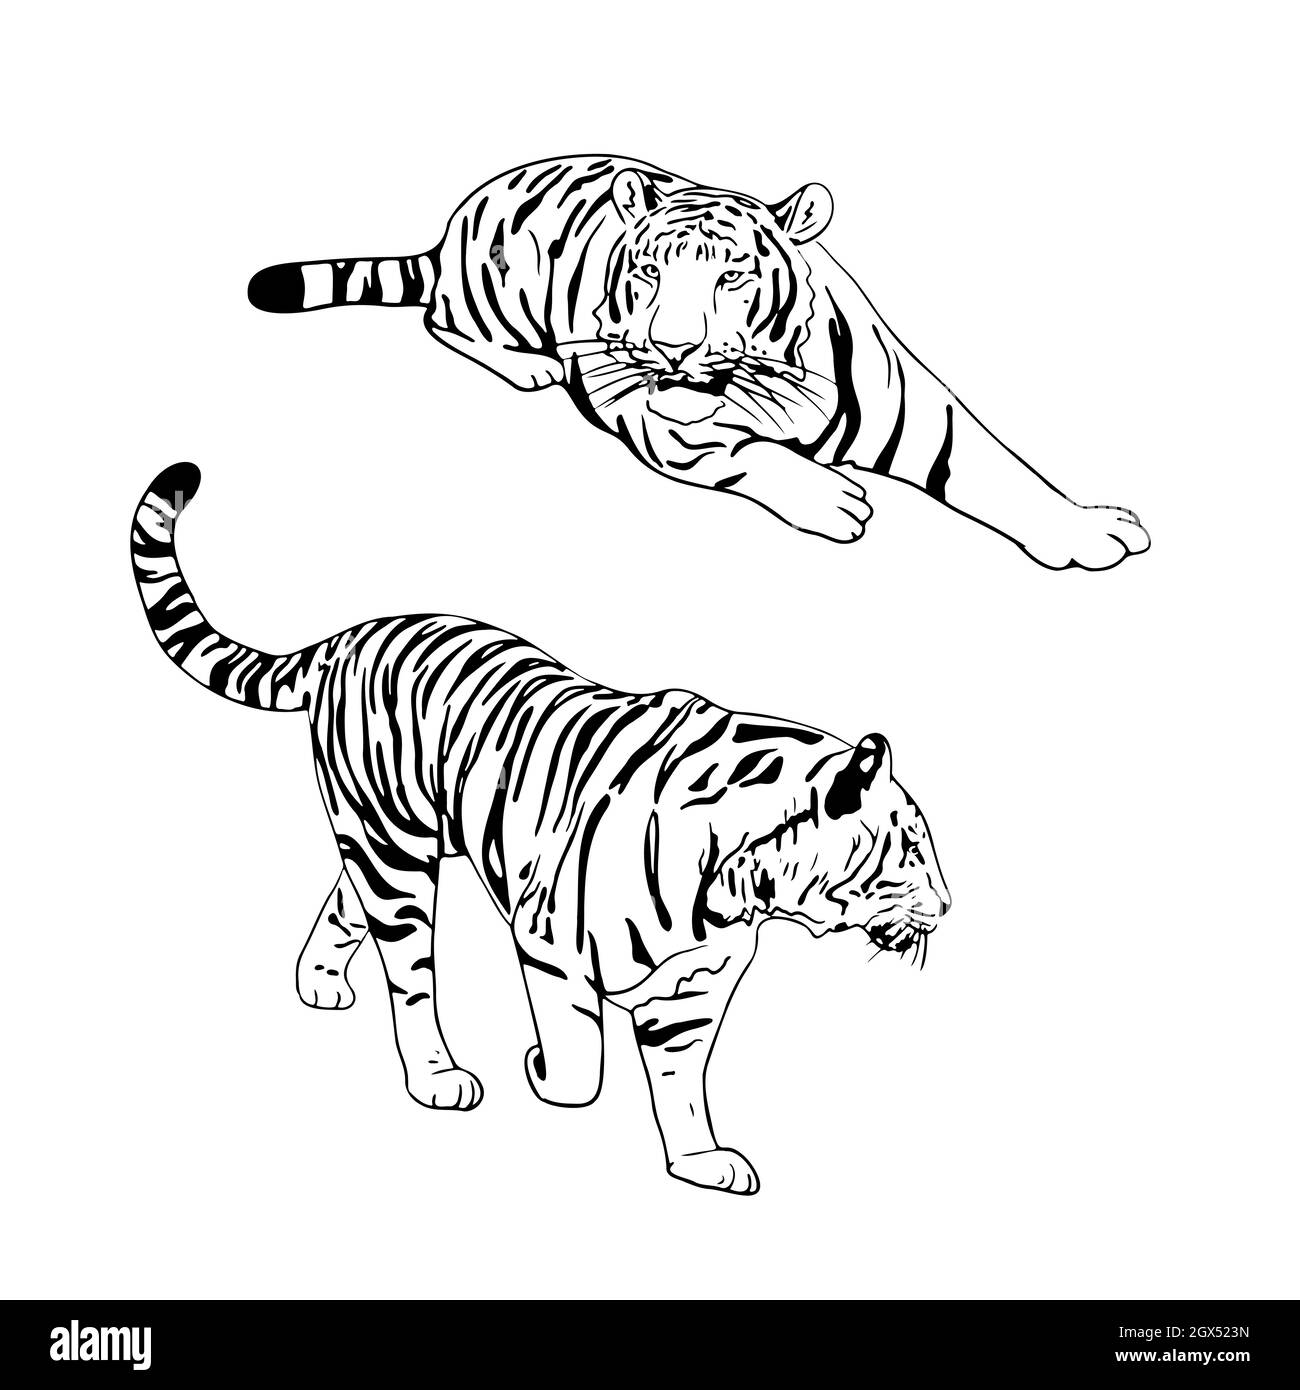 South China Tiger  South China Tiger Drawing Transparent PNG  590x288   Free Download on NicePNG